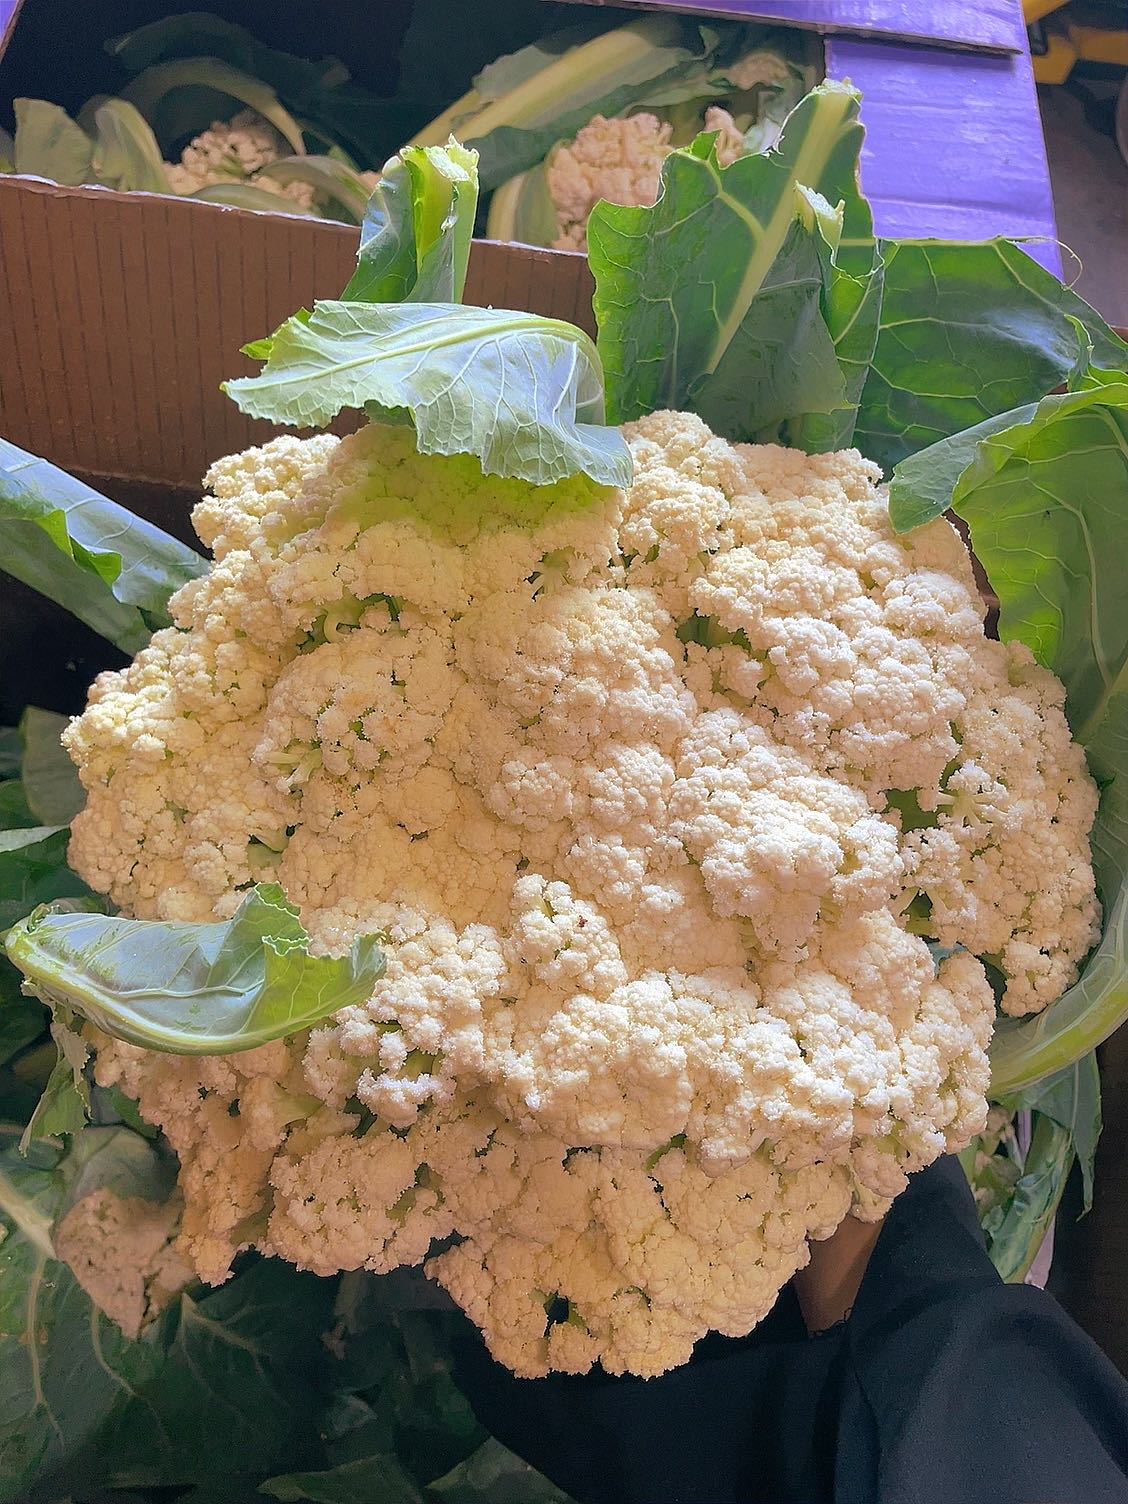 [Fresh]-Organic-Chinese-Cauliflower-with-Leaves,-Whole,-1.5kg+-1